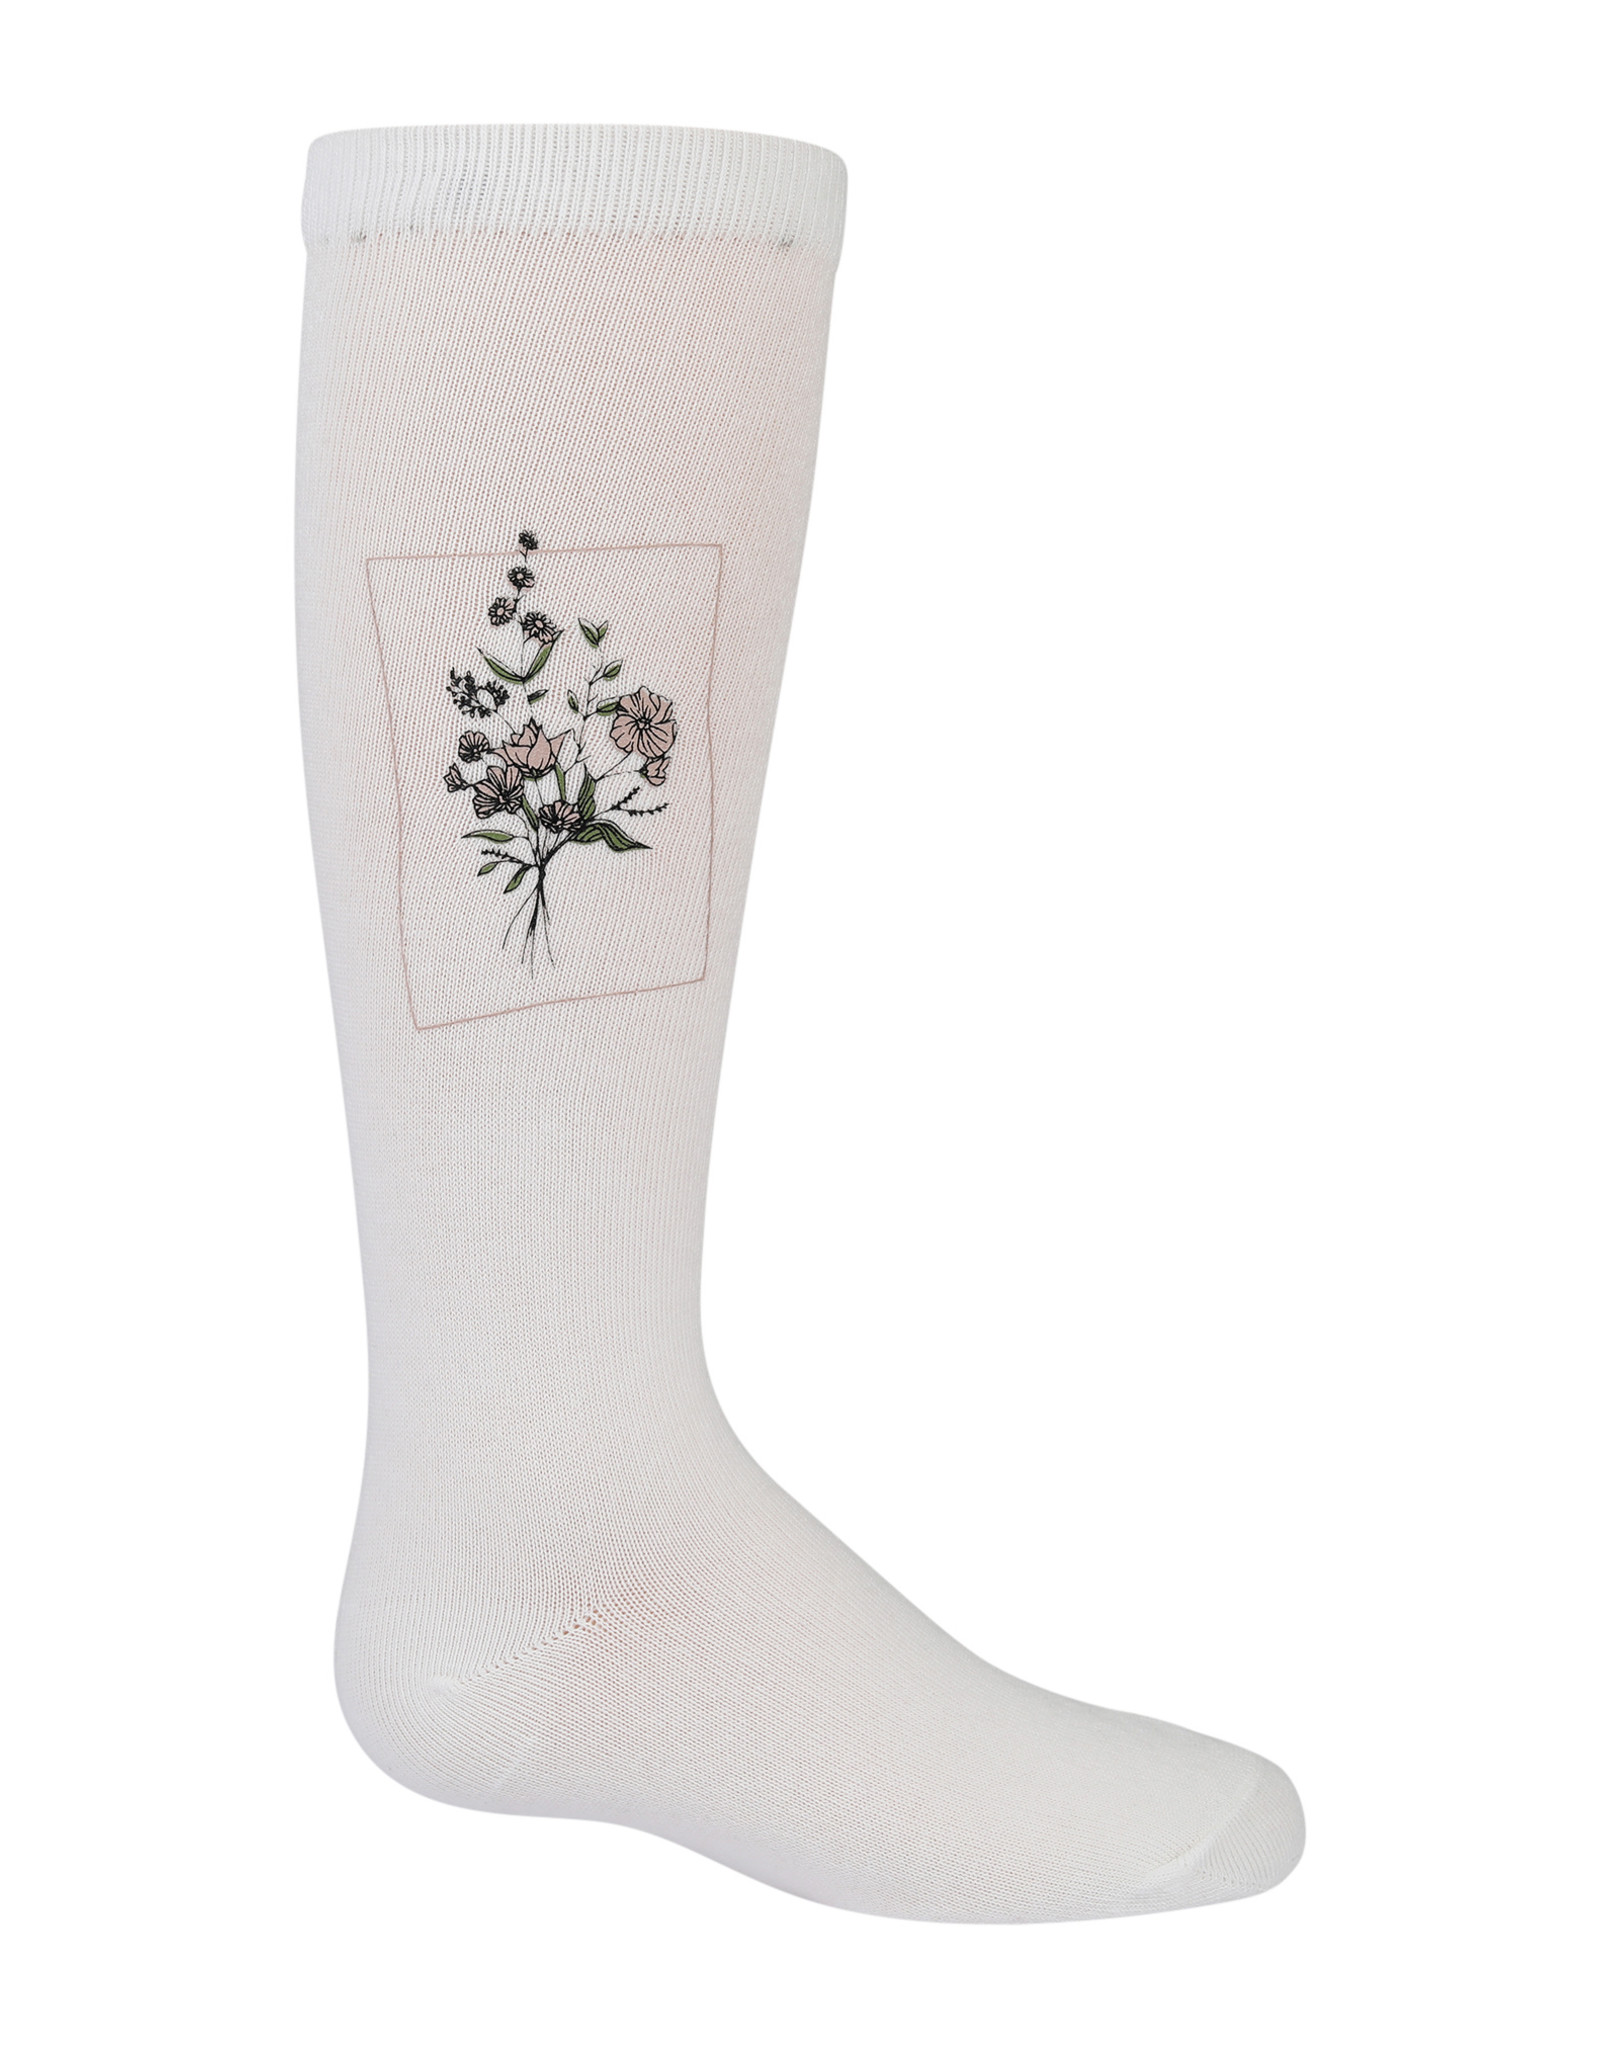 Zubii Zubii Floral Frame Knee Sock